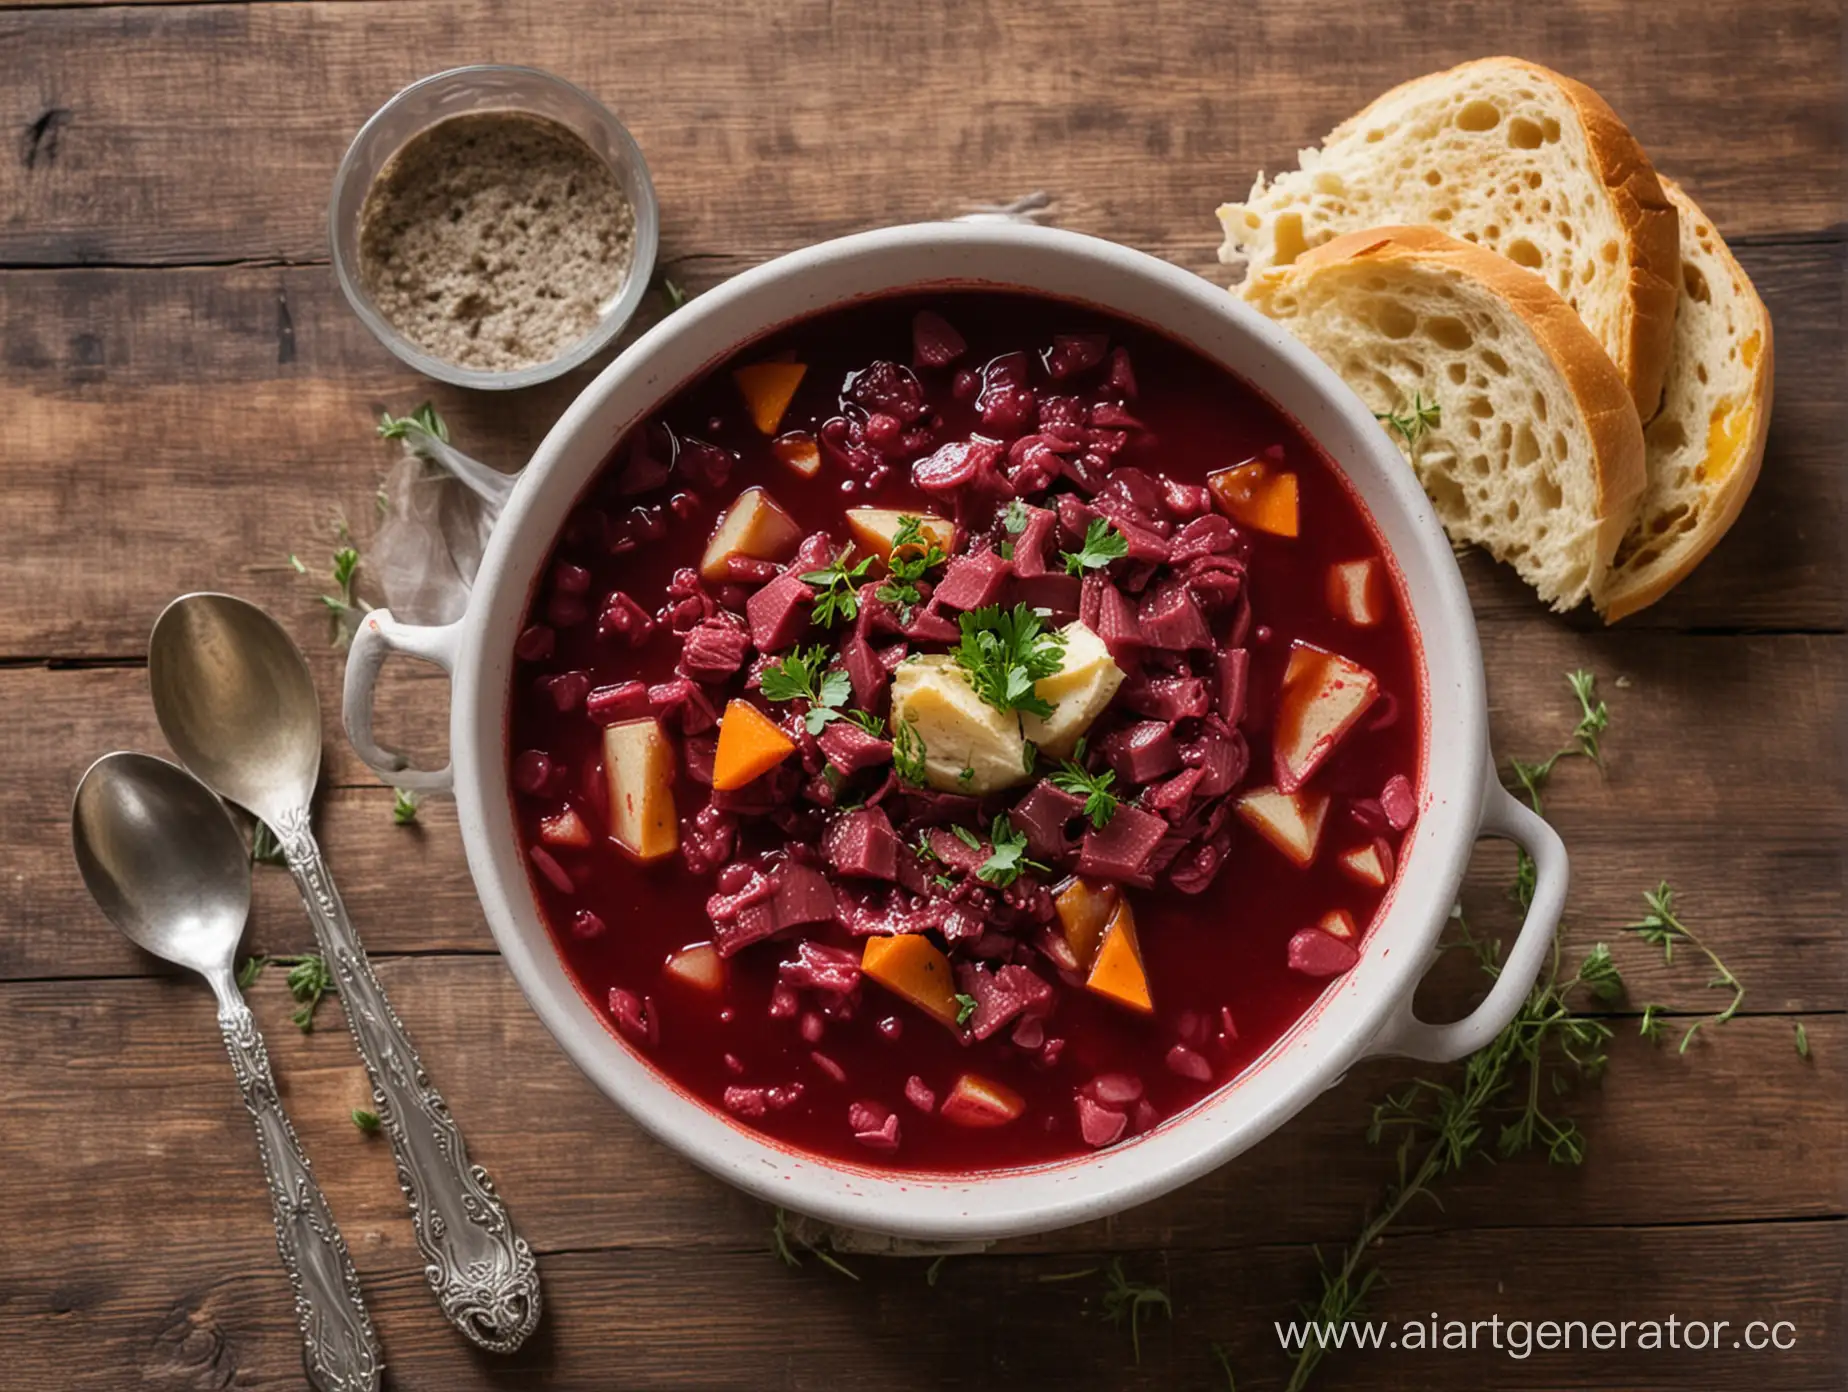 Authentic-Russian-Borscht-Recipe-Vibrant-Beet-Soup-with-Sour-Cream-Garnish